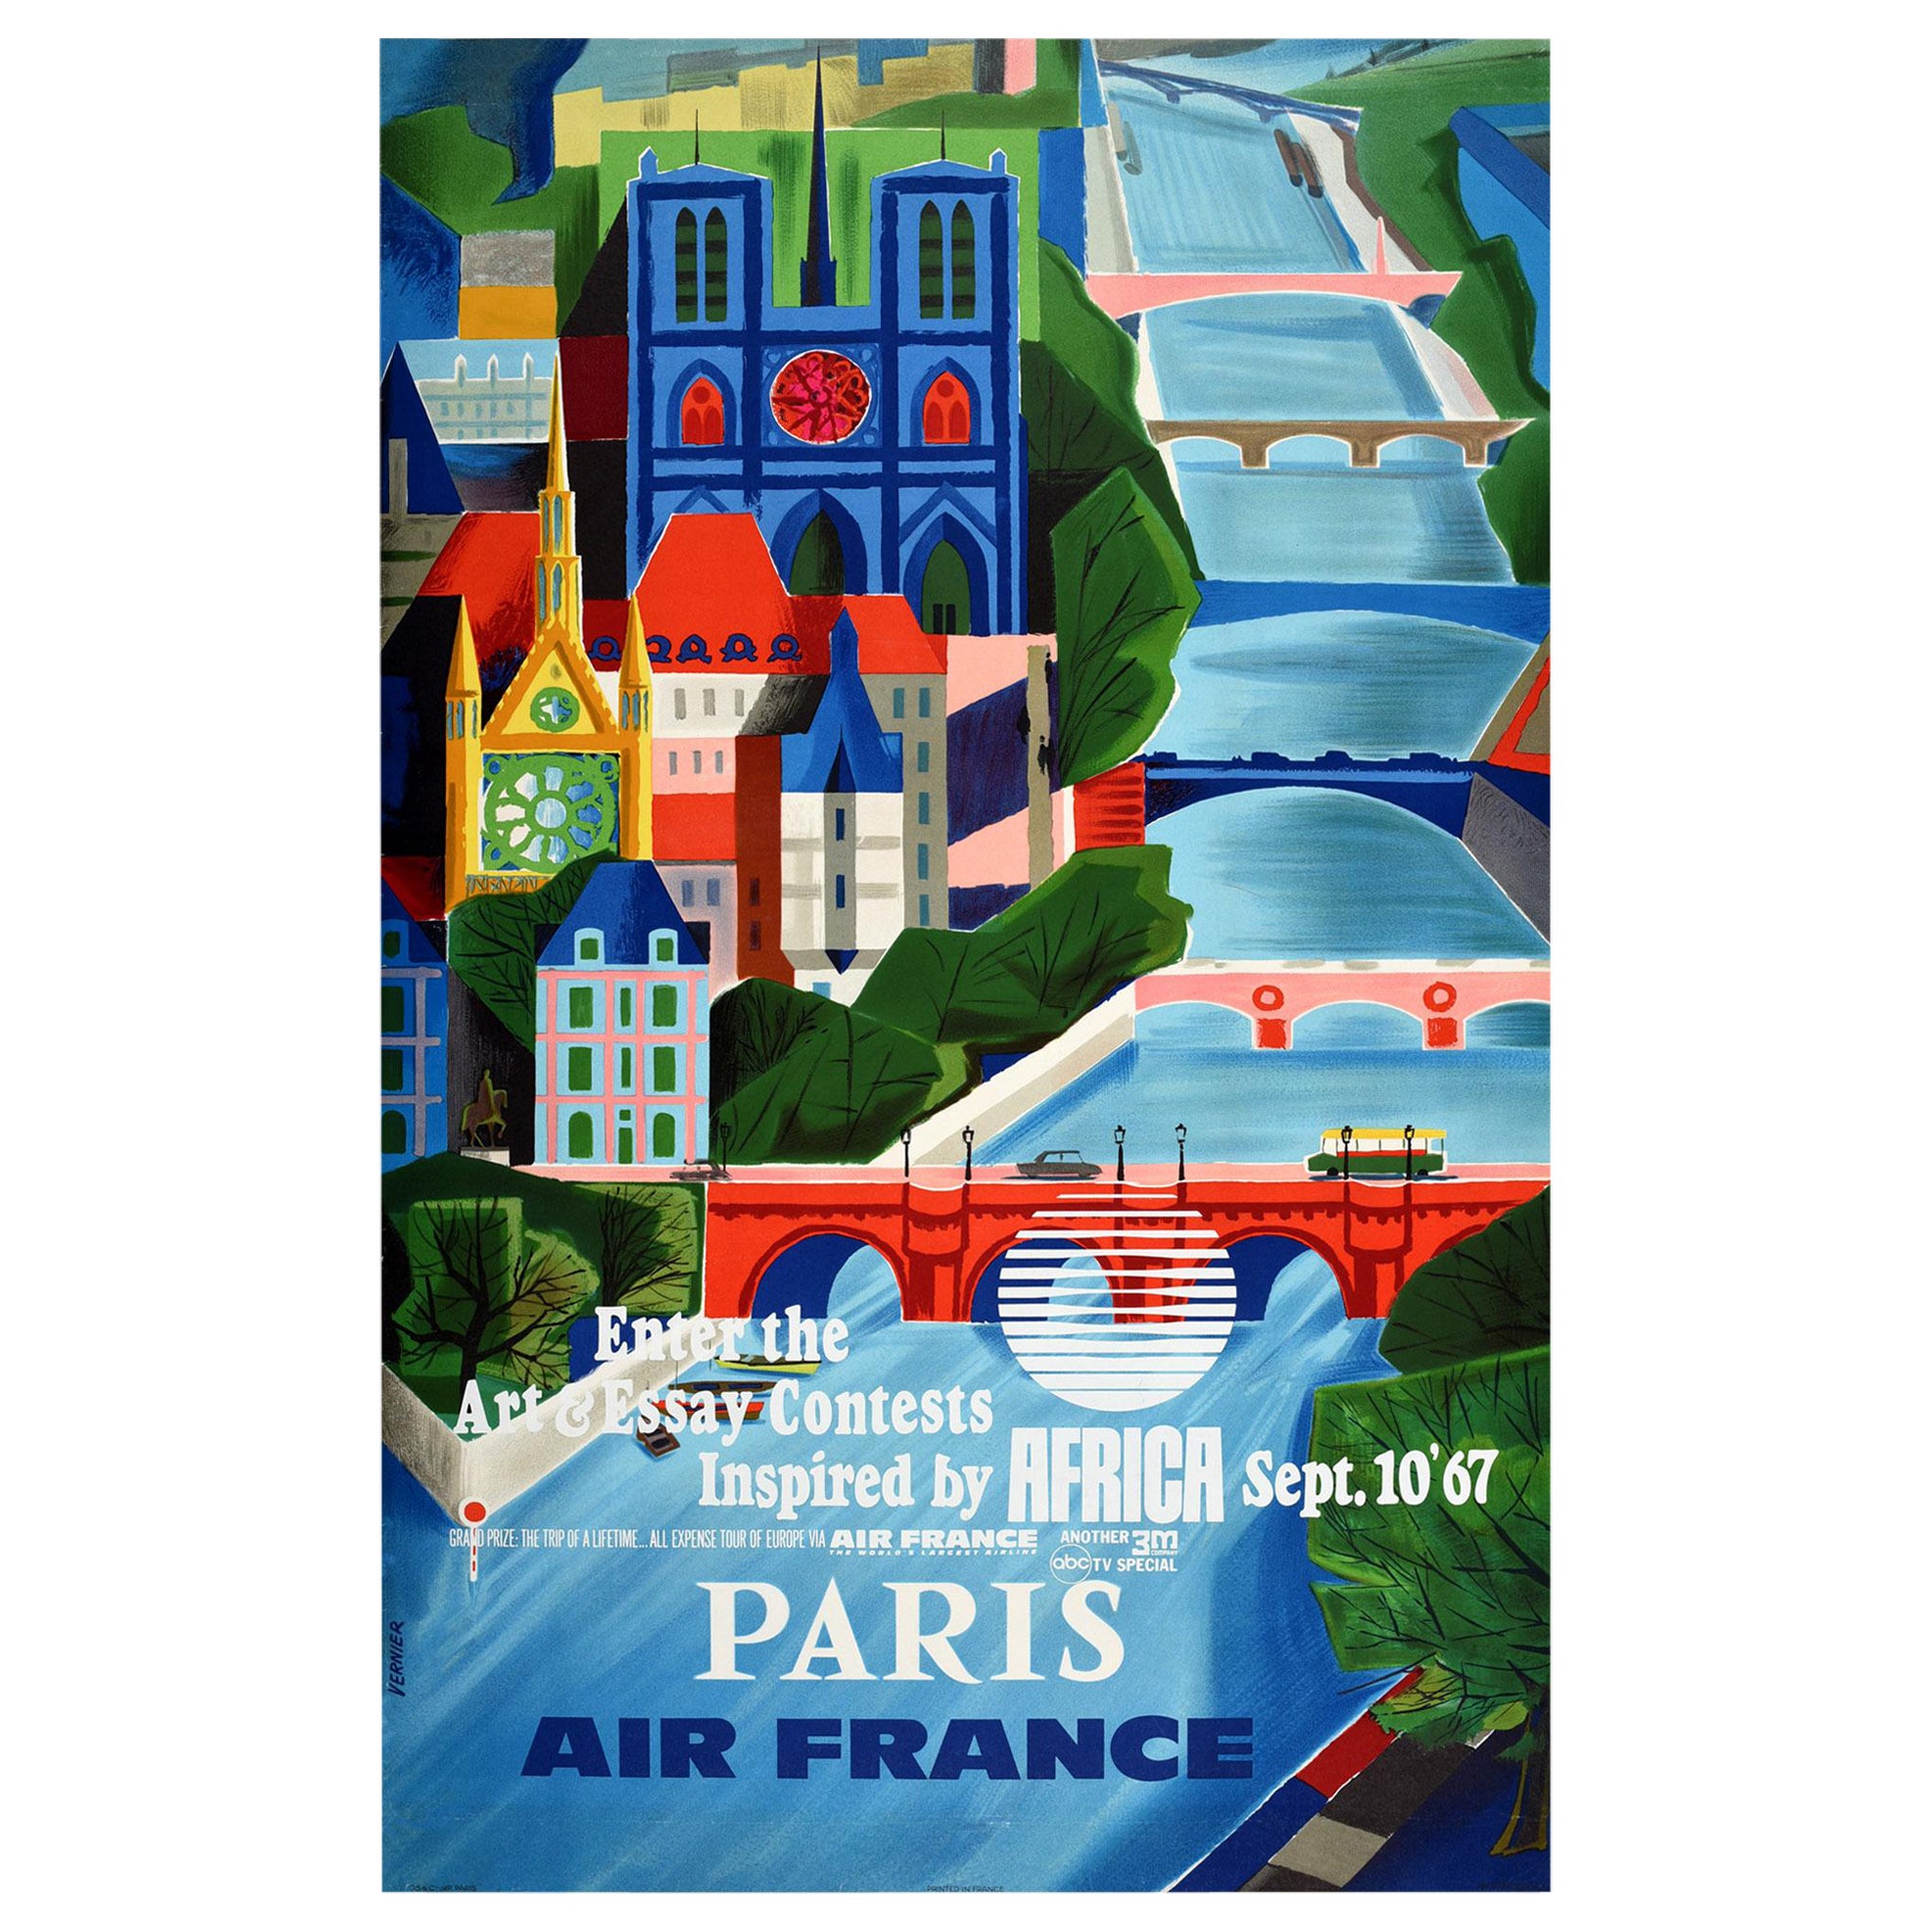 Original Vintage Poster Paris Air France Africa Inspired Art Essay European Tour